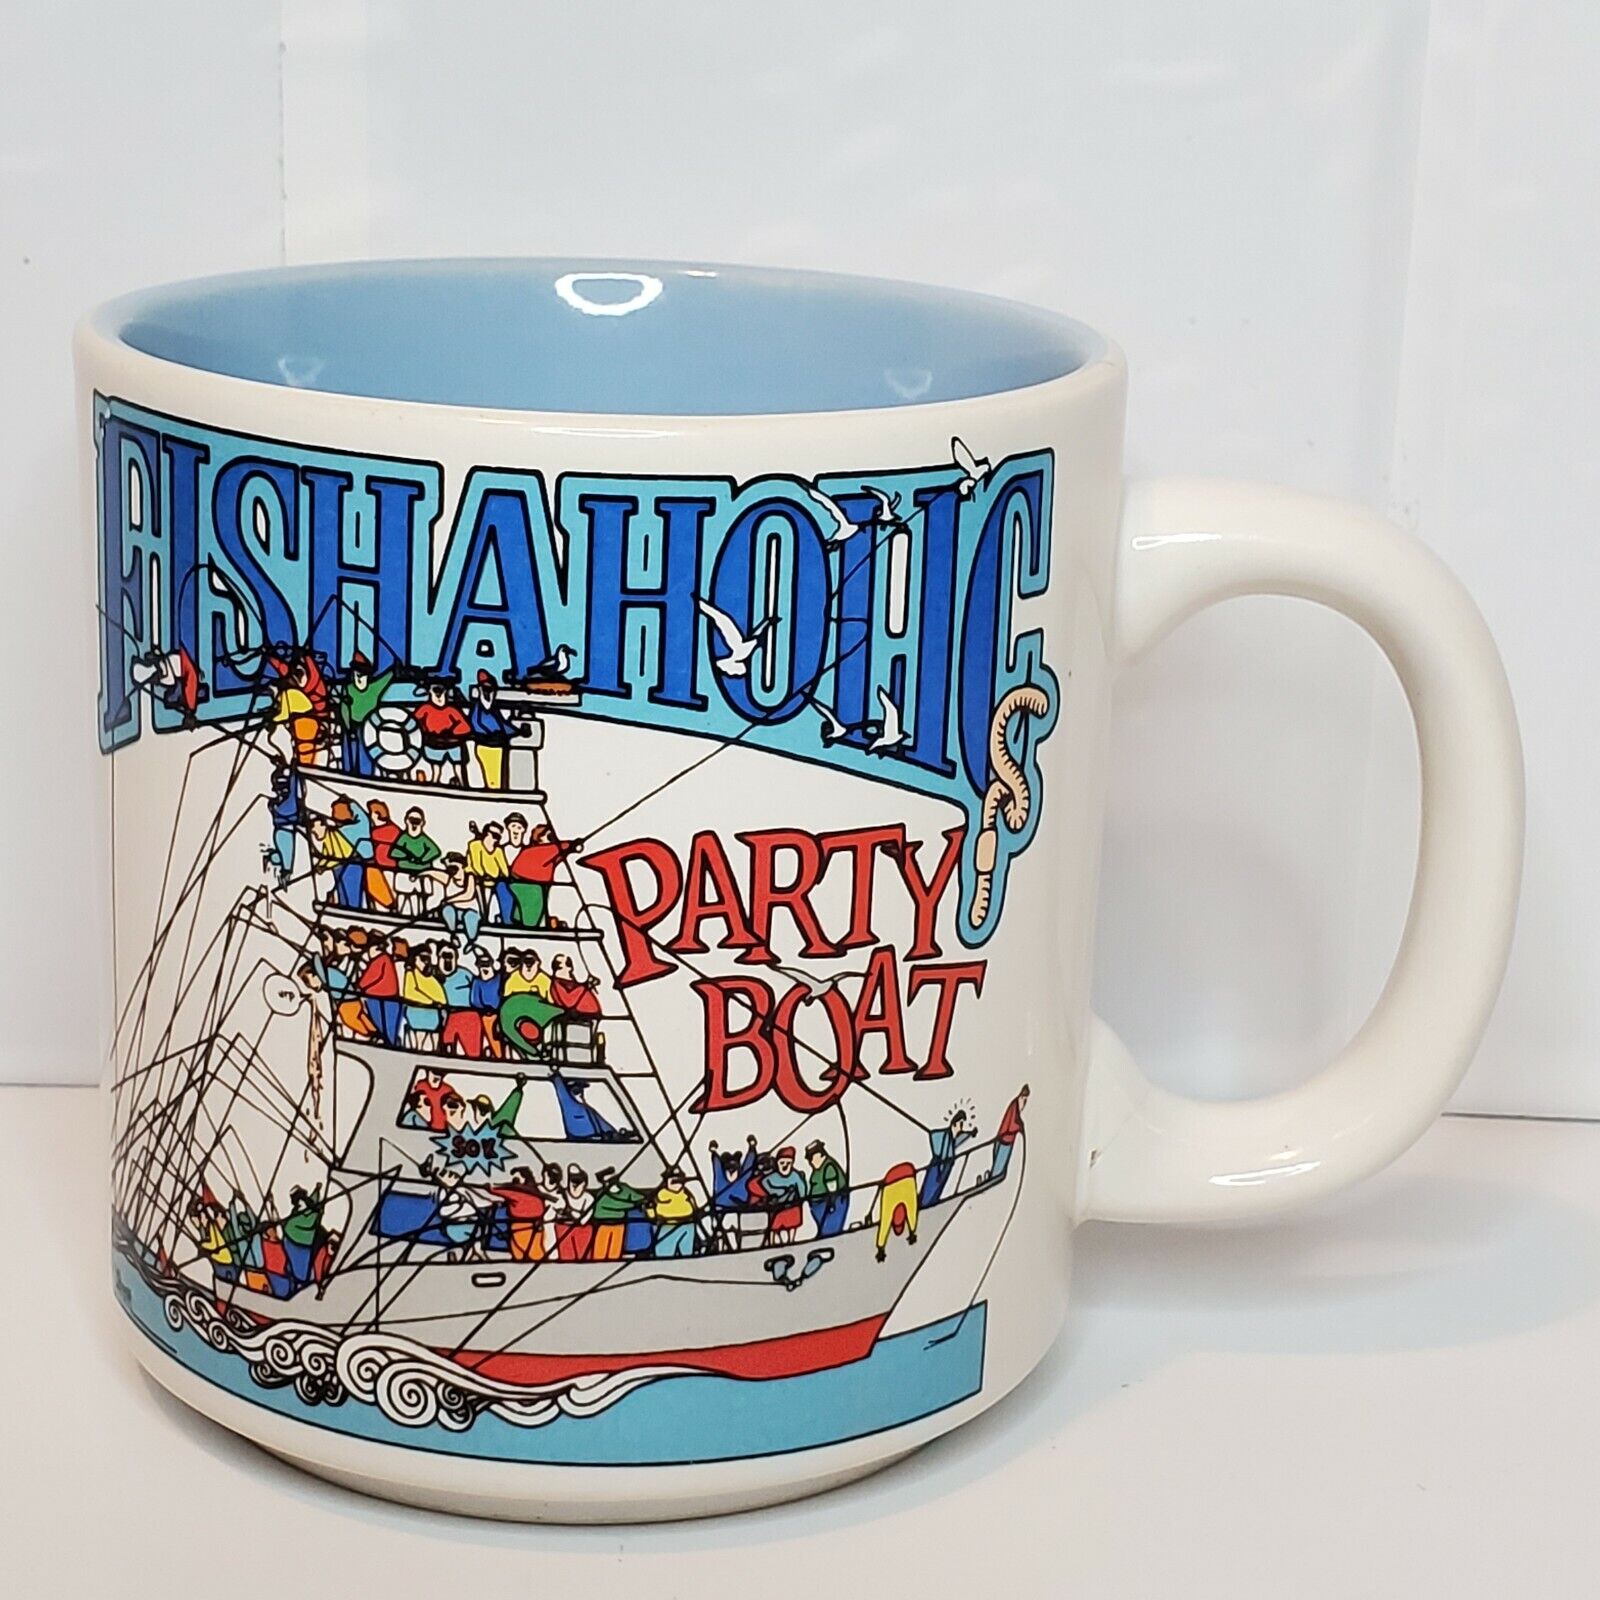 Fishaholic Party Boat Coffee Cup Fisherman Gift Fish Mug Fishing Summertime Blue